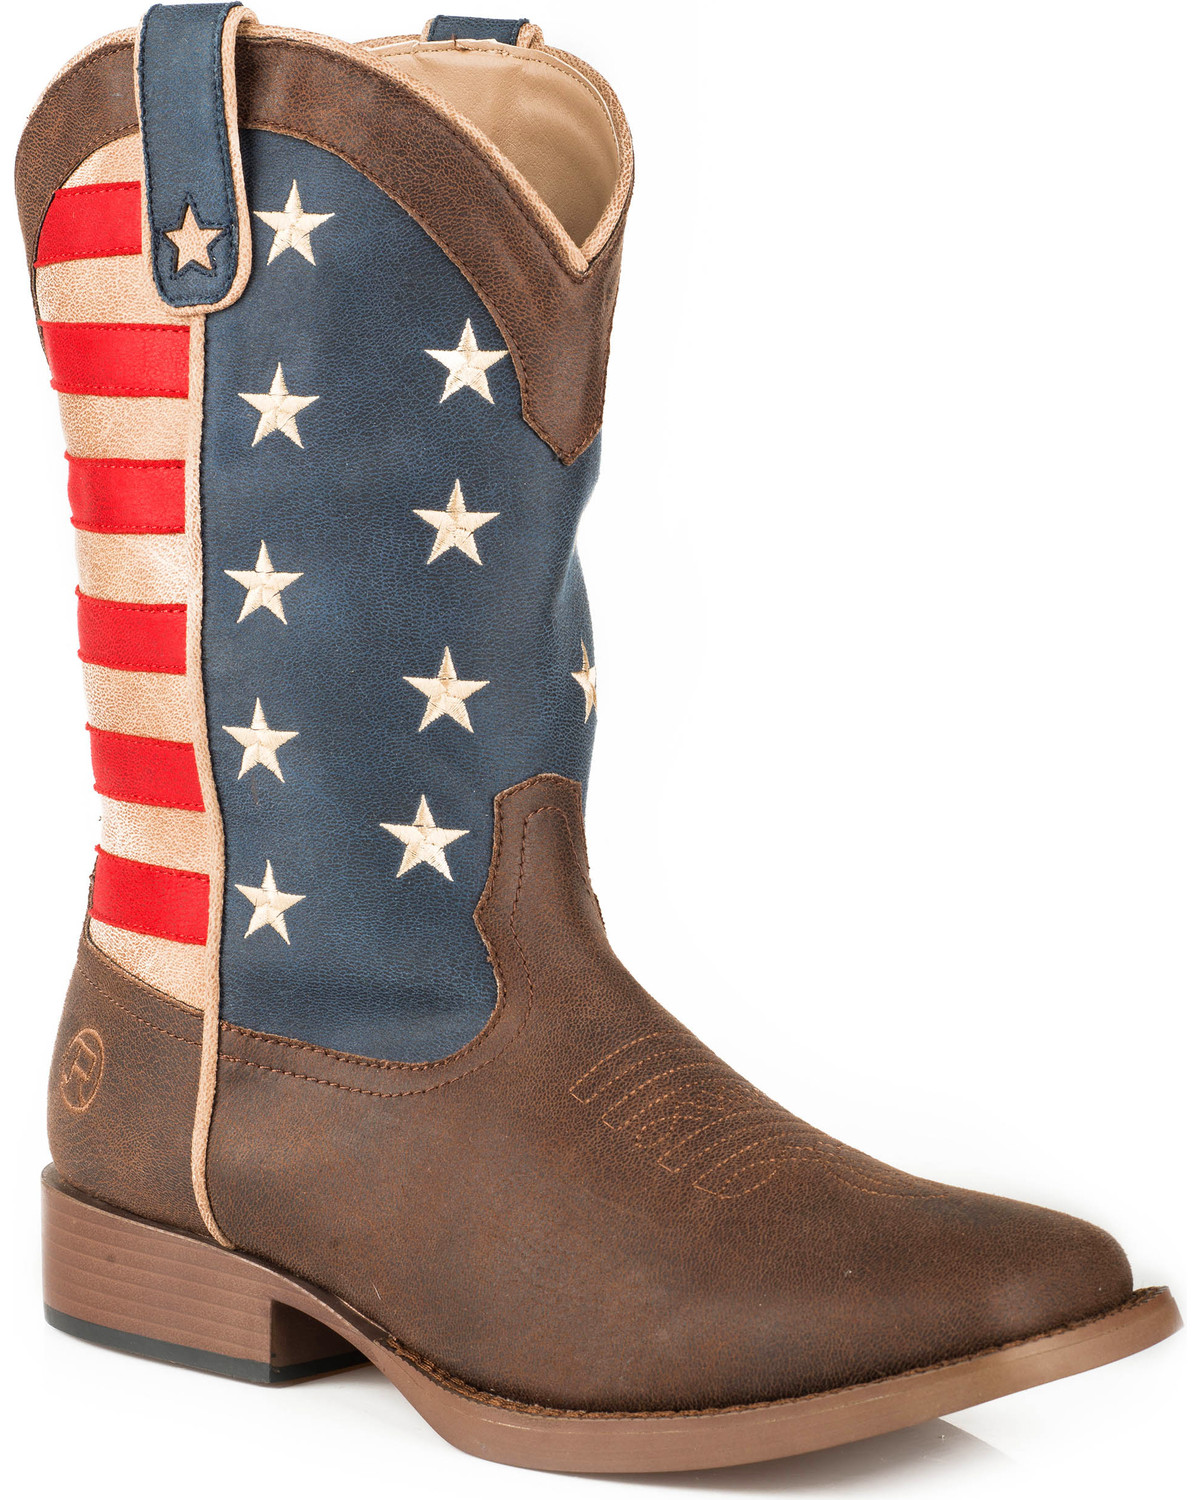 Roper Men's American Patriot Western Boots - Broad Square Toe